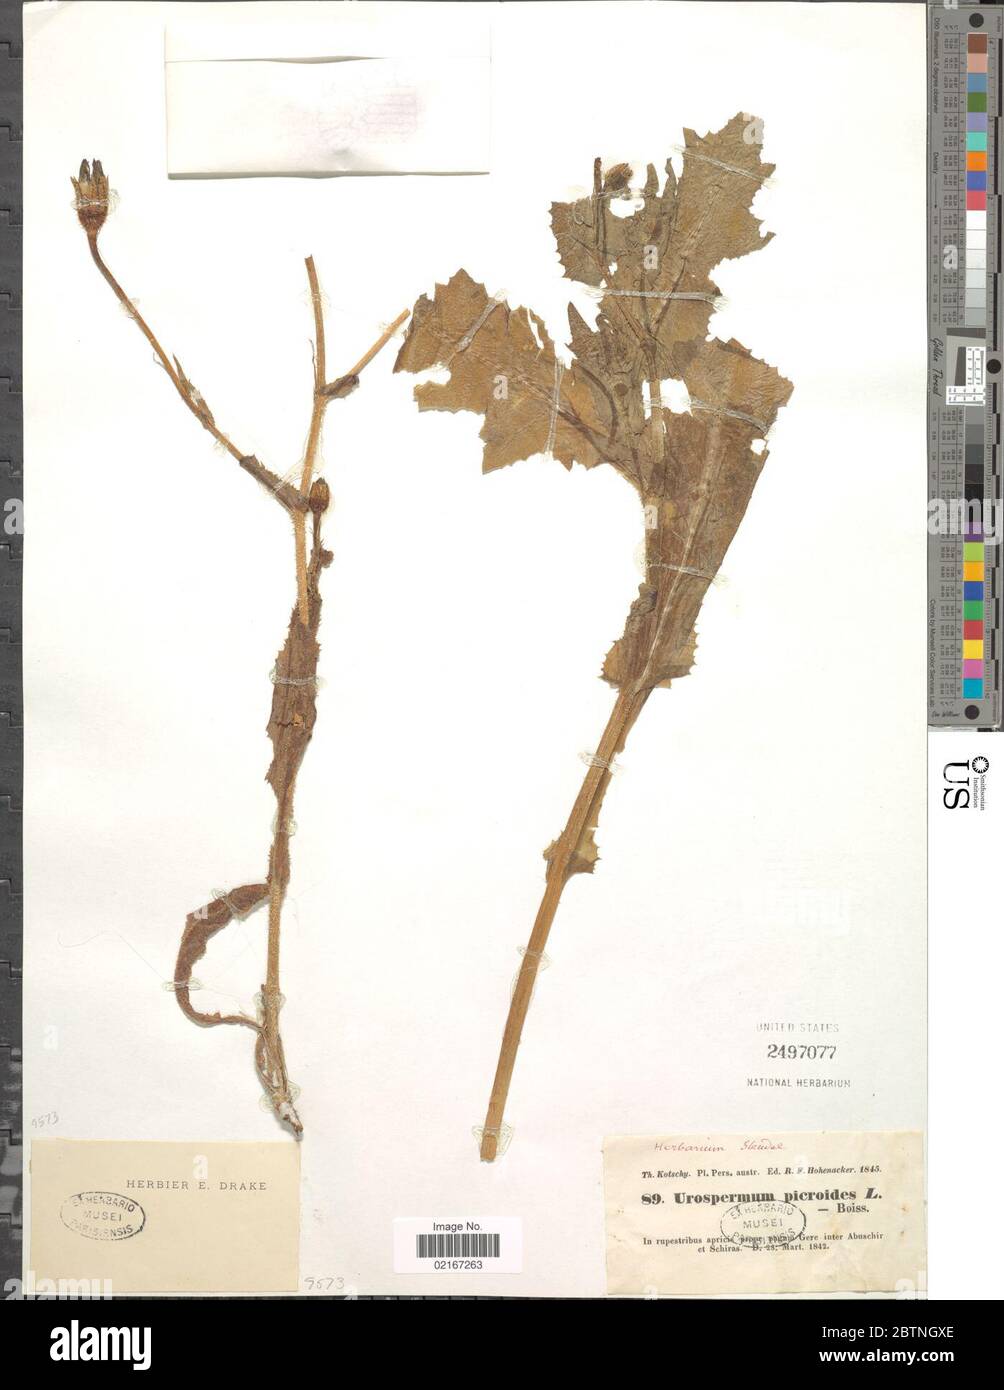 Urospermum picroides L FW Schmidt. Stock Photo